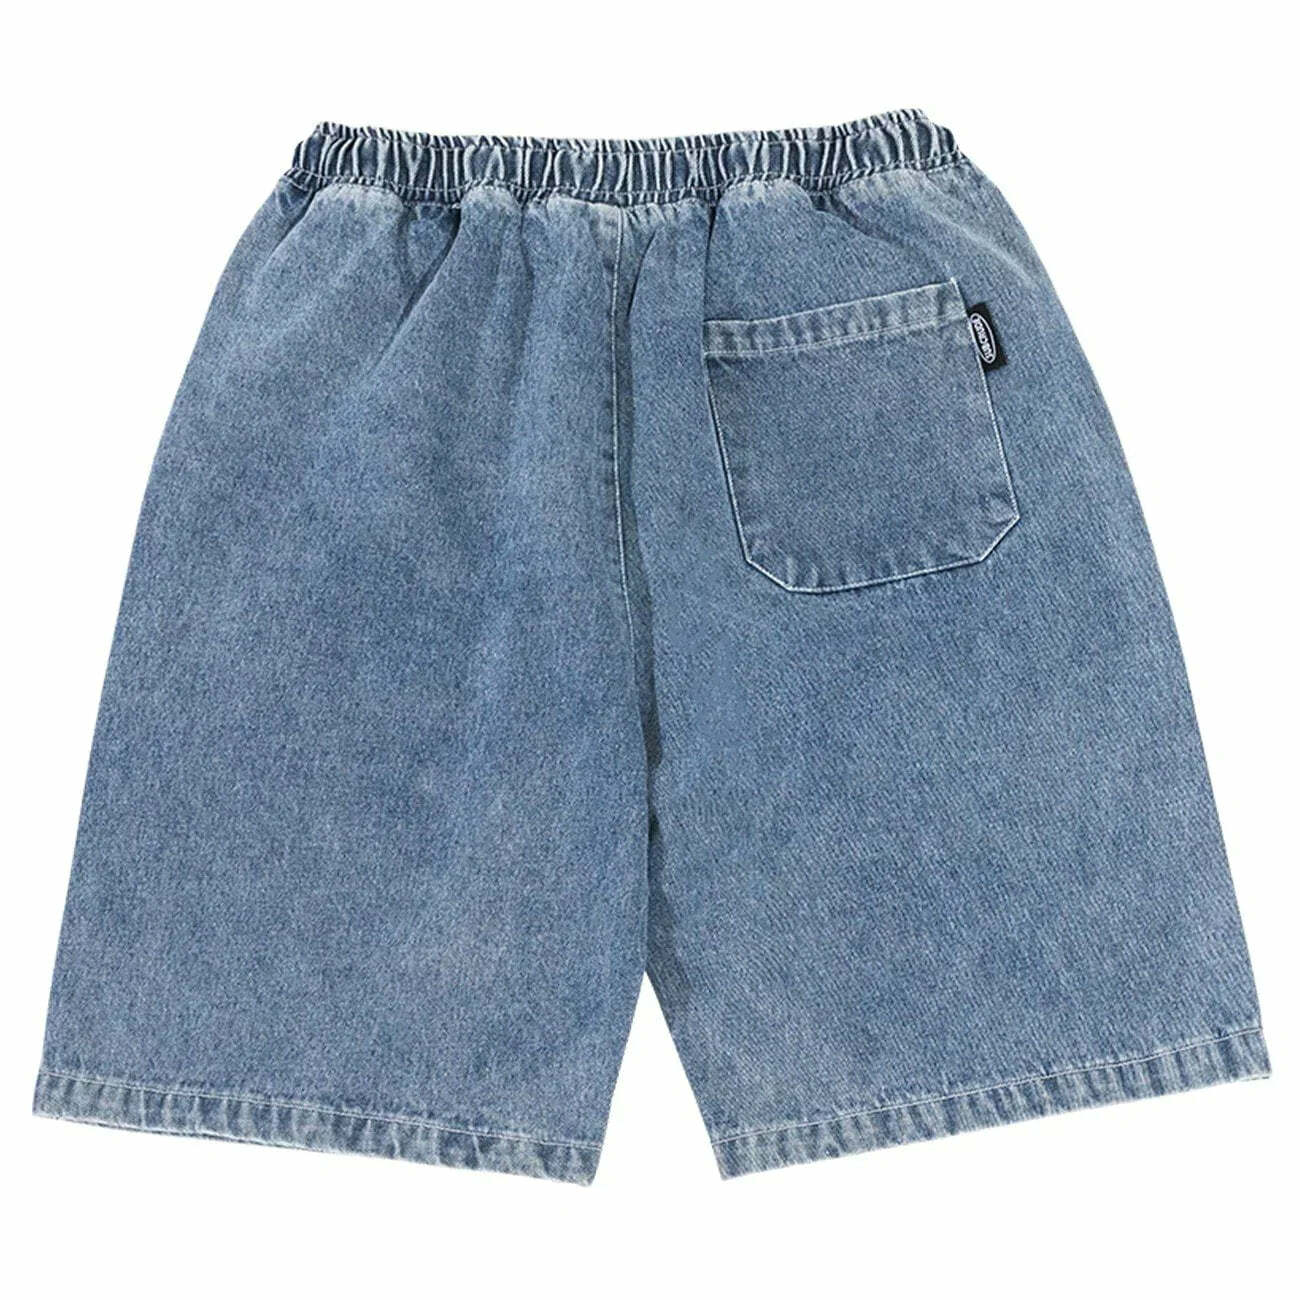 denim letter embroidery shorts edgy y2k streetwear 5401